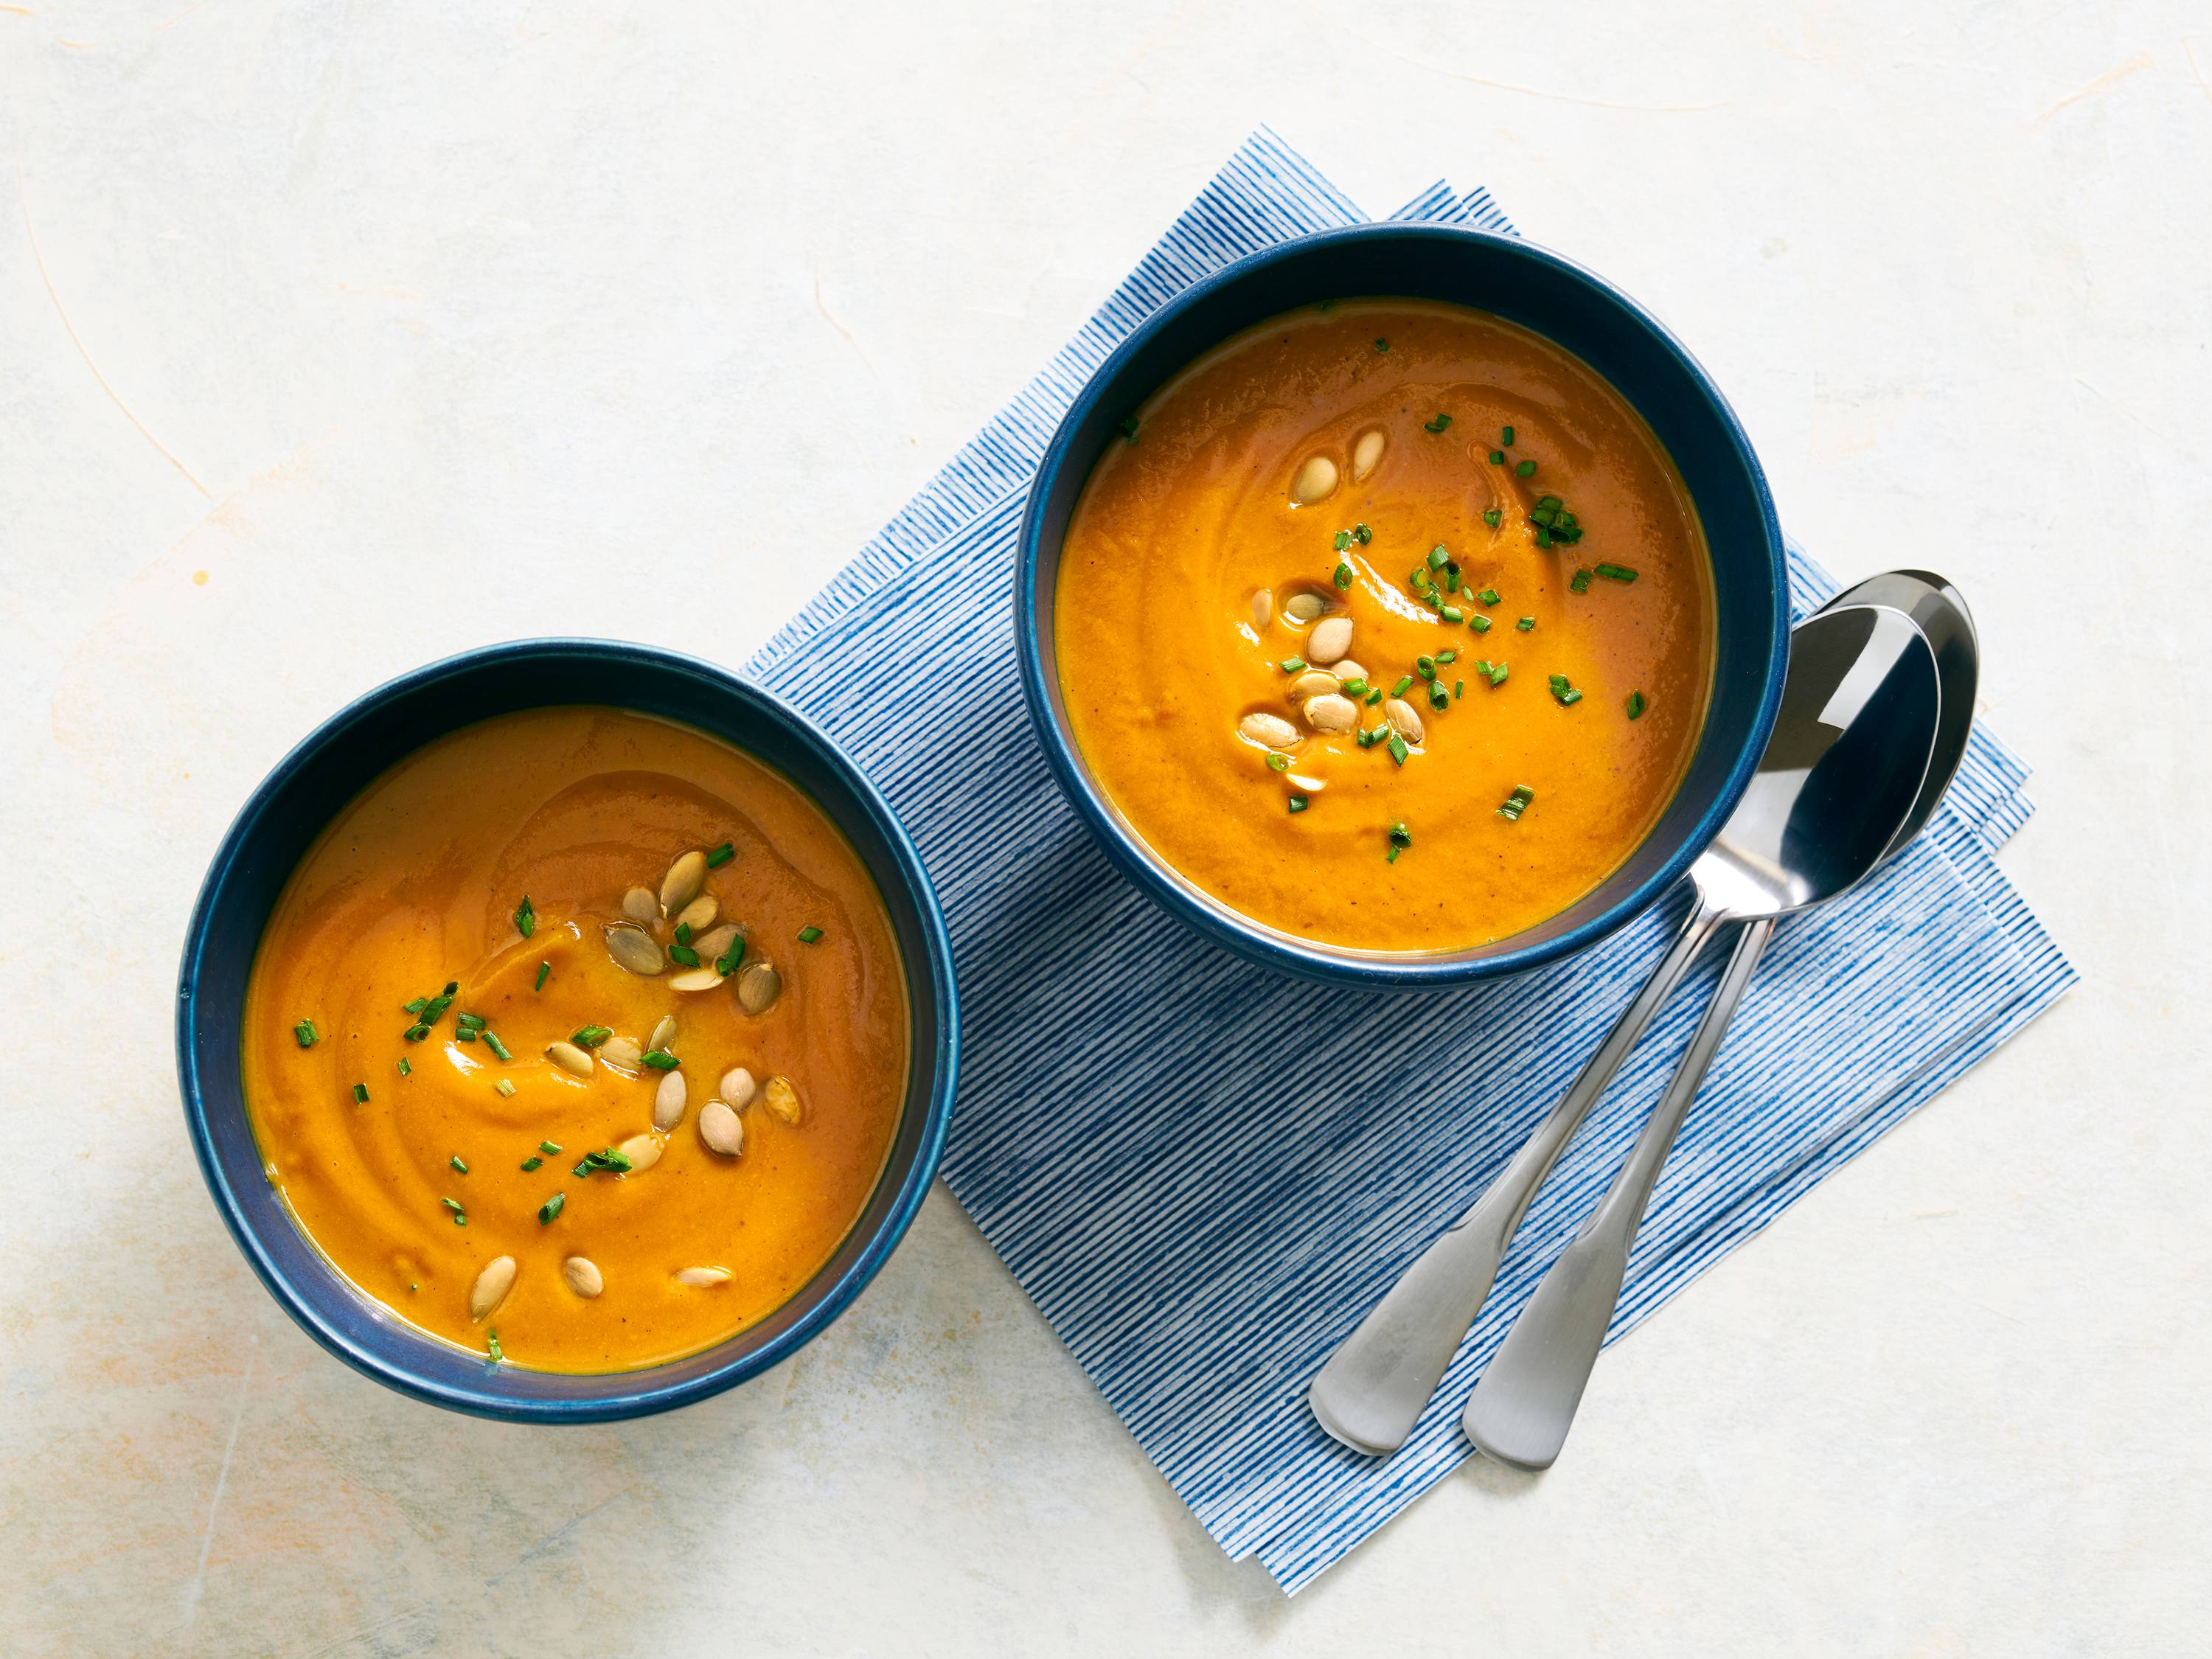 https://www.savoryonline.com/app/uploads/recipes/244317/roasted-delicata-squash-soup-with-pepitas.jpg